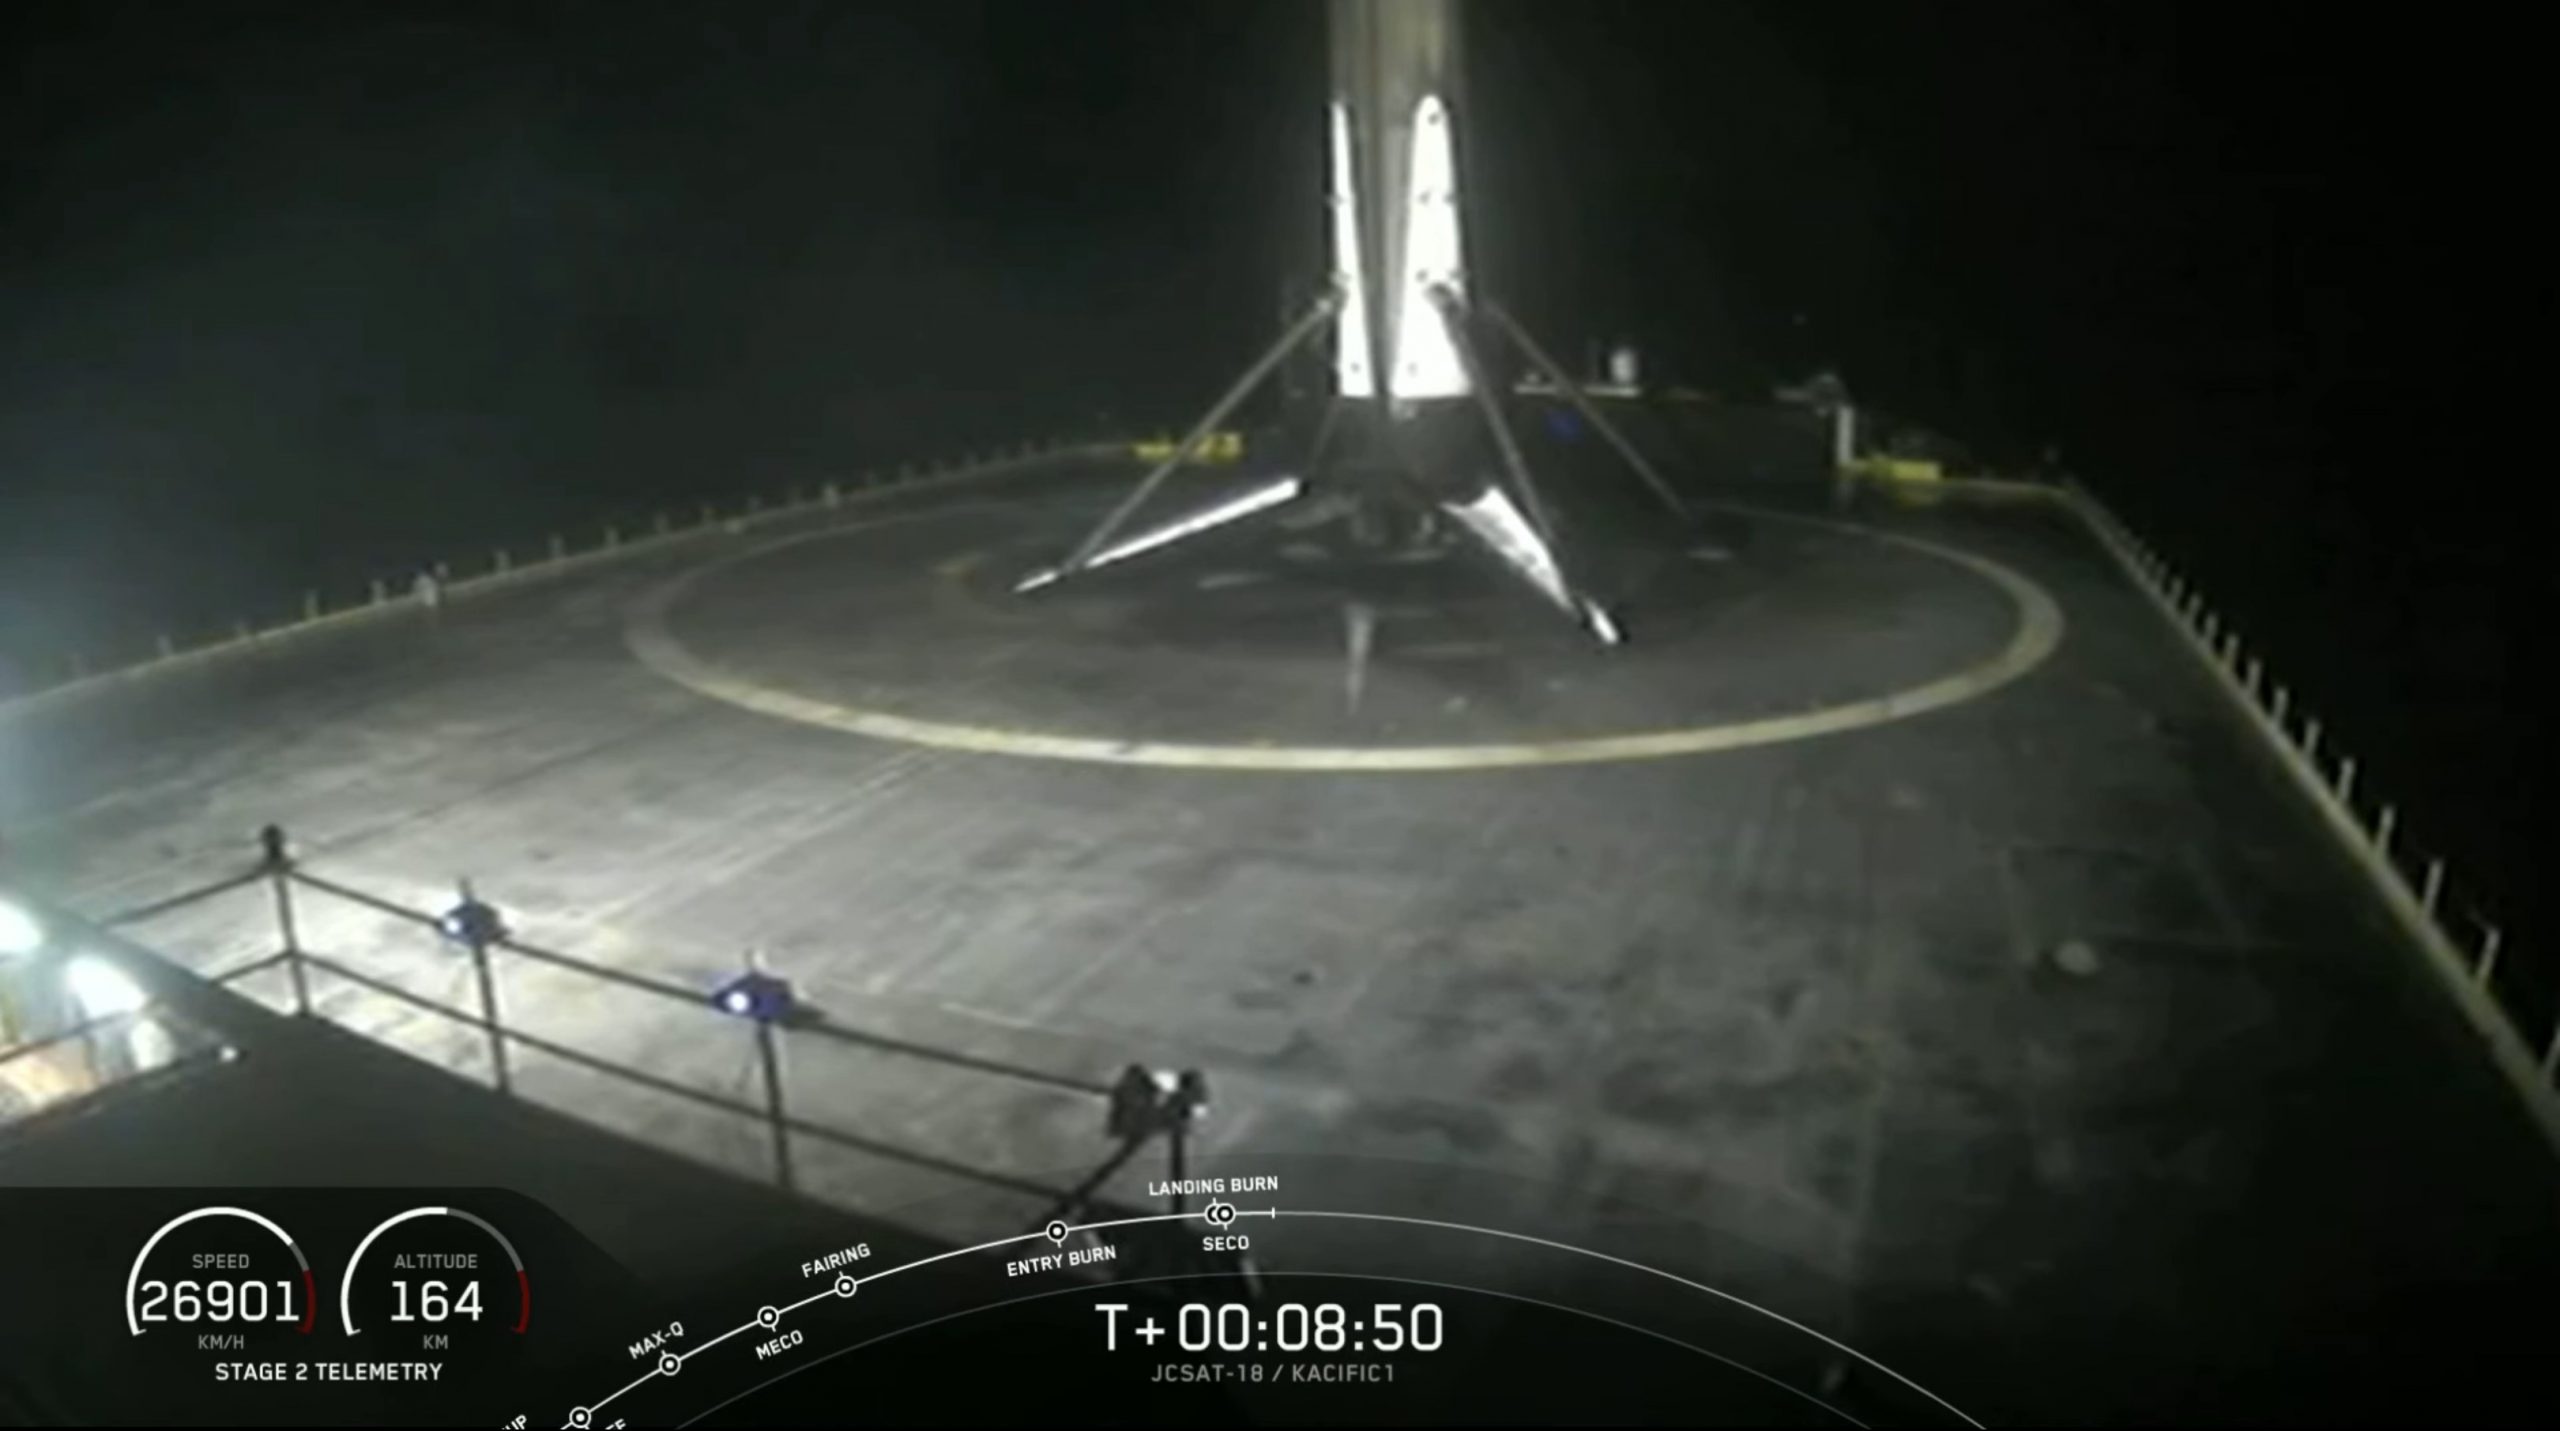 Kacific-1 Falcon 9 B1056 LC-40 121619 (SpaceX) landing OCISLY 1